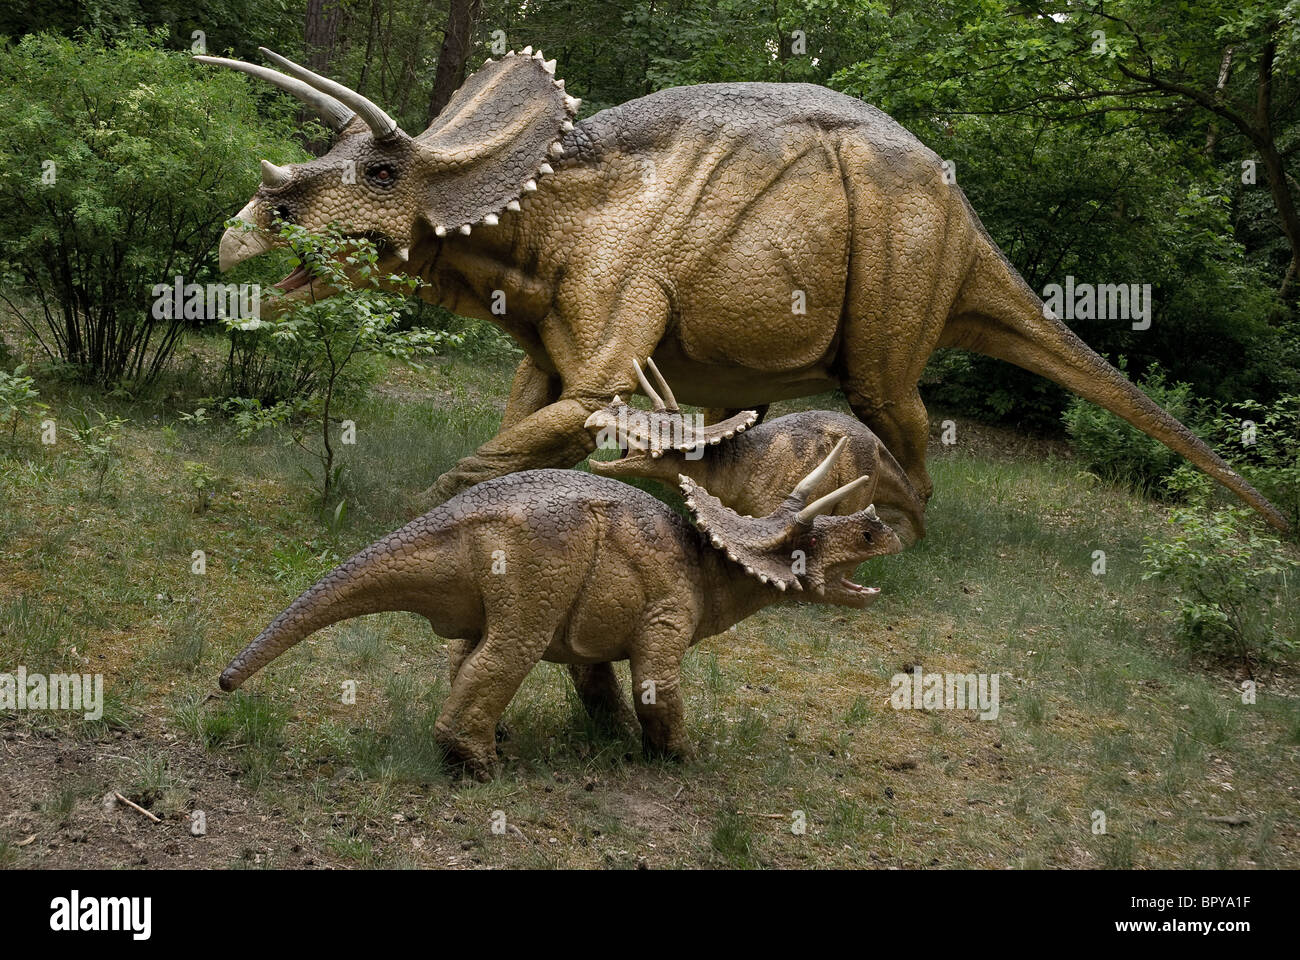 - Deux dinosaures dinosaure Zuniceratops en milieu naturel Banque D'Images